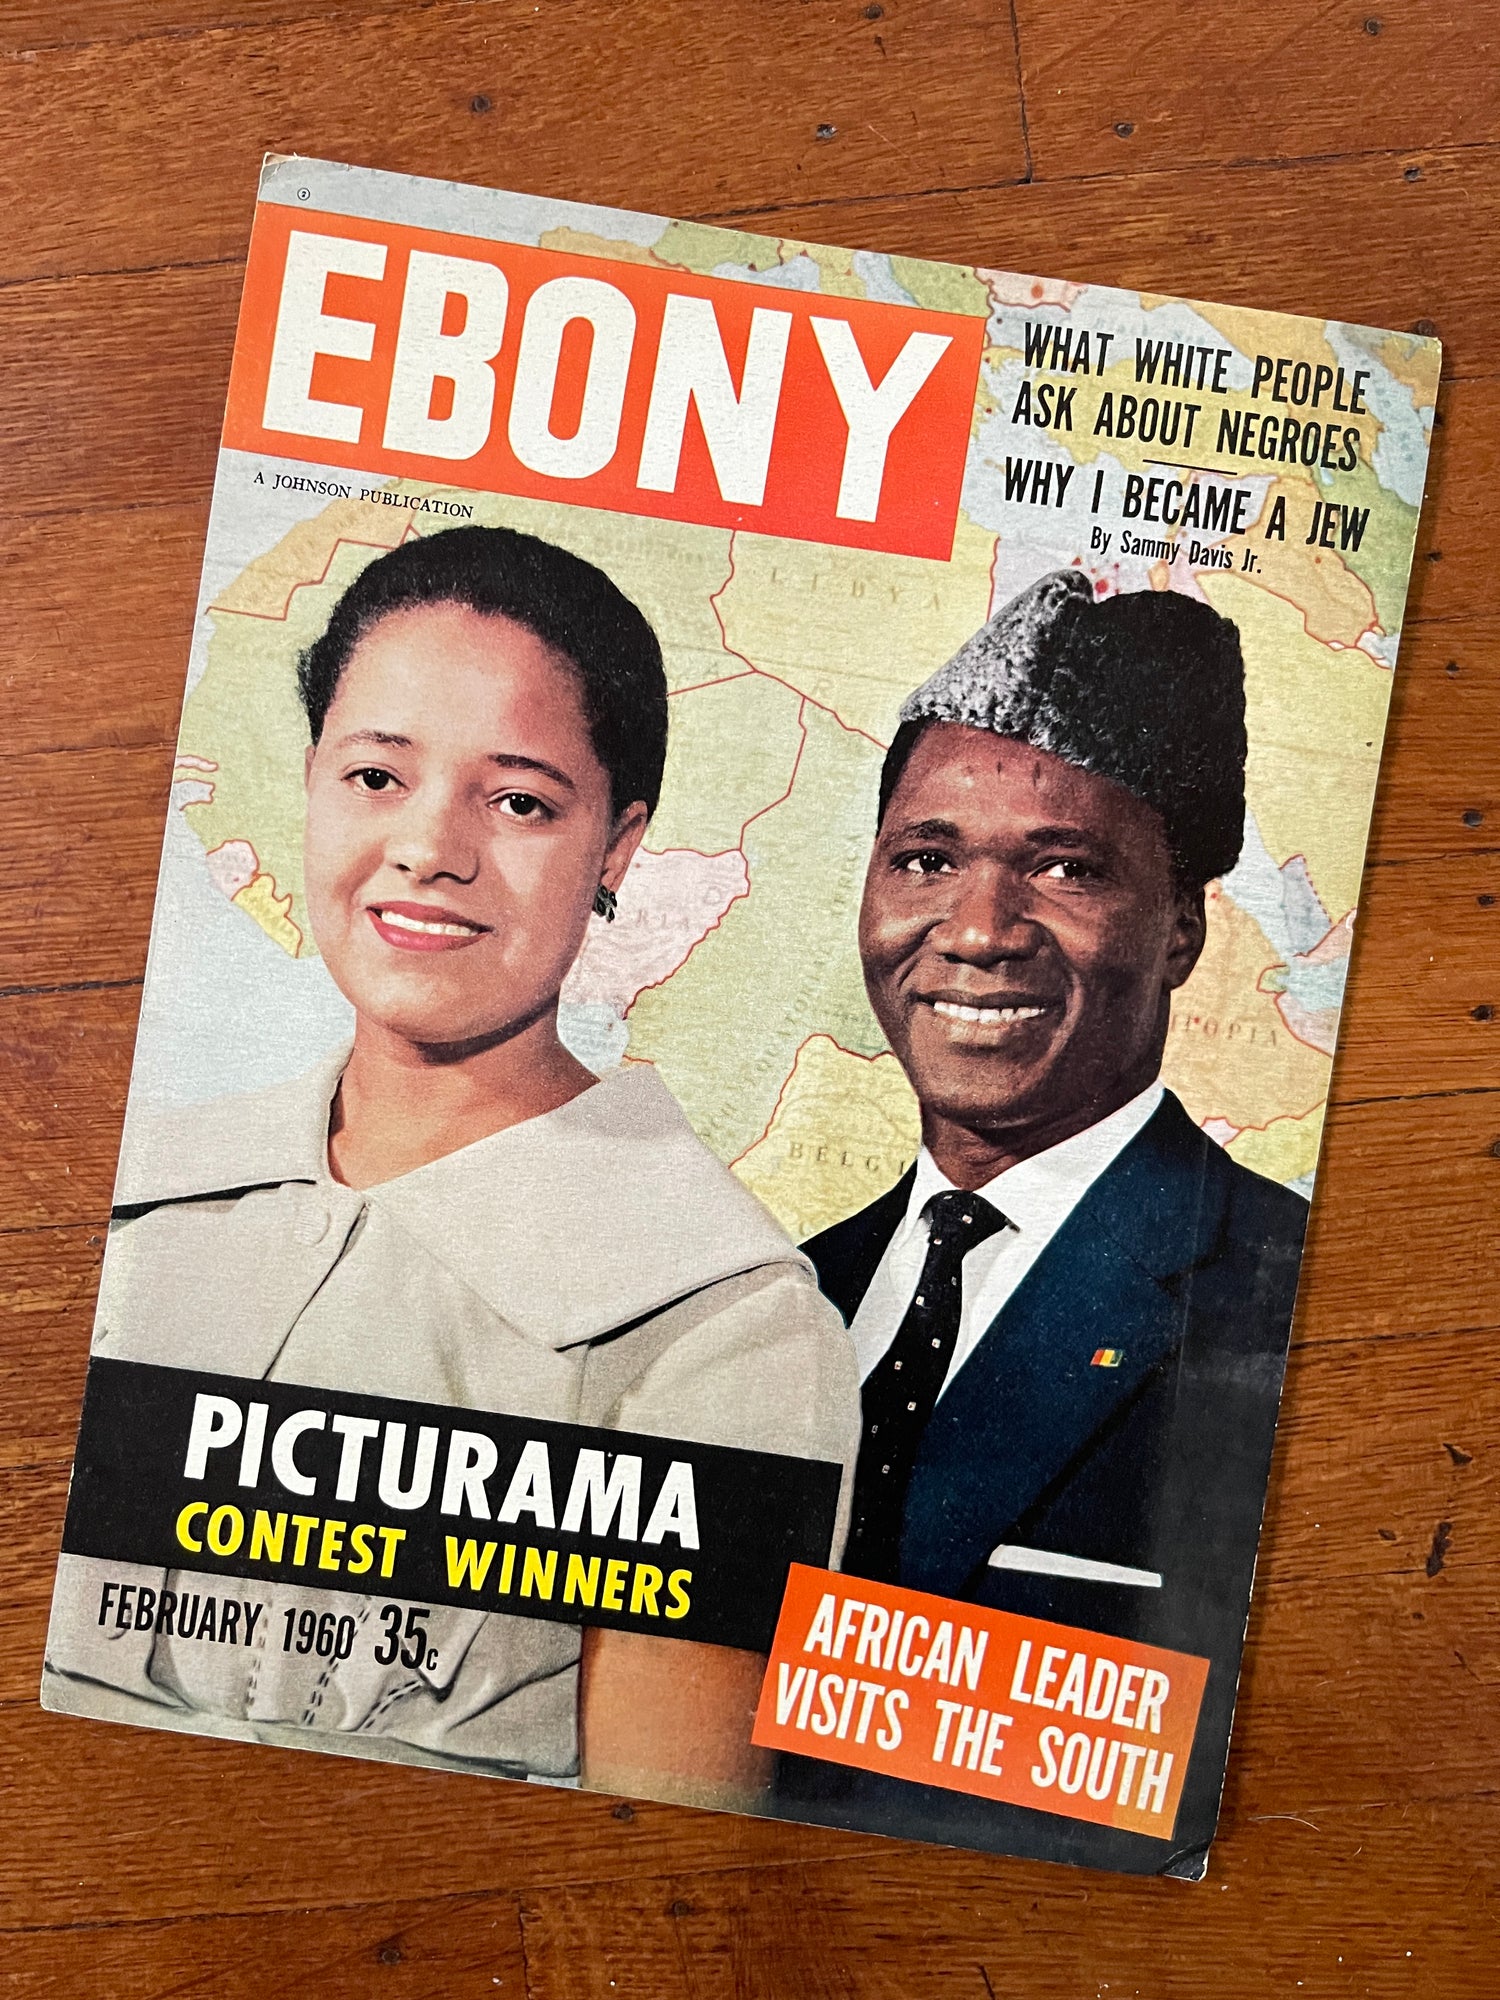 Vintage Rare Ebony Magazine Merchandising Display Cover Poster (February 1960)